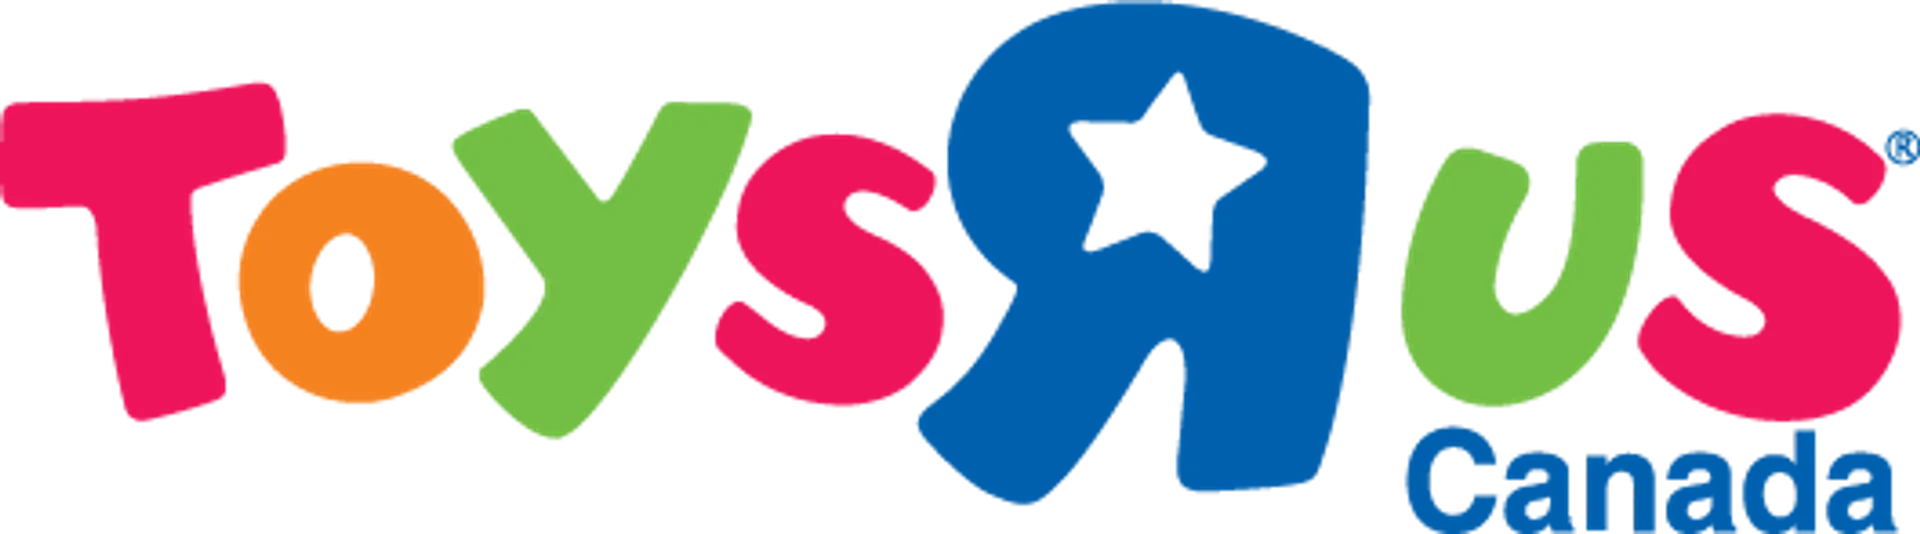 TOYS "R" US logo de circulaires